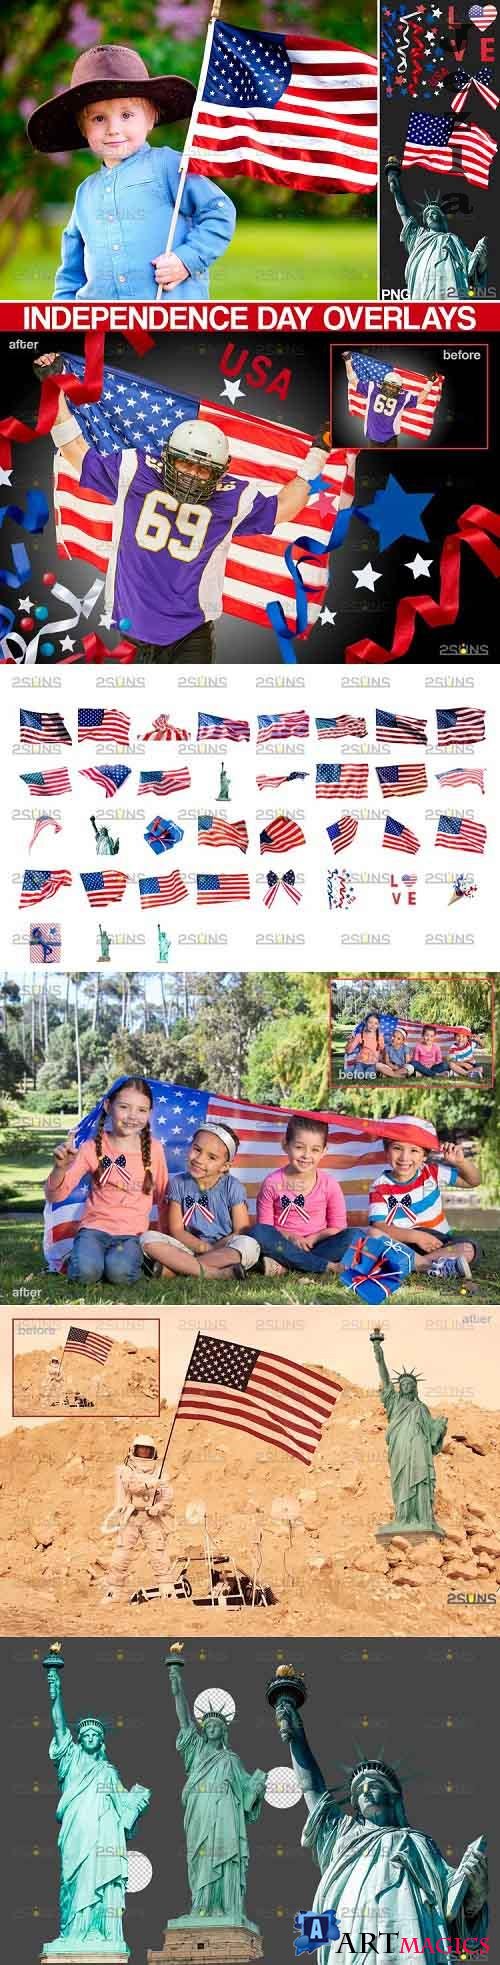 Independence Day photo overlays, Photoshop overlays, USA - 644527